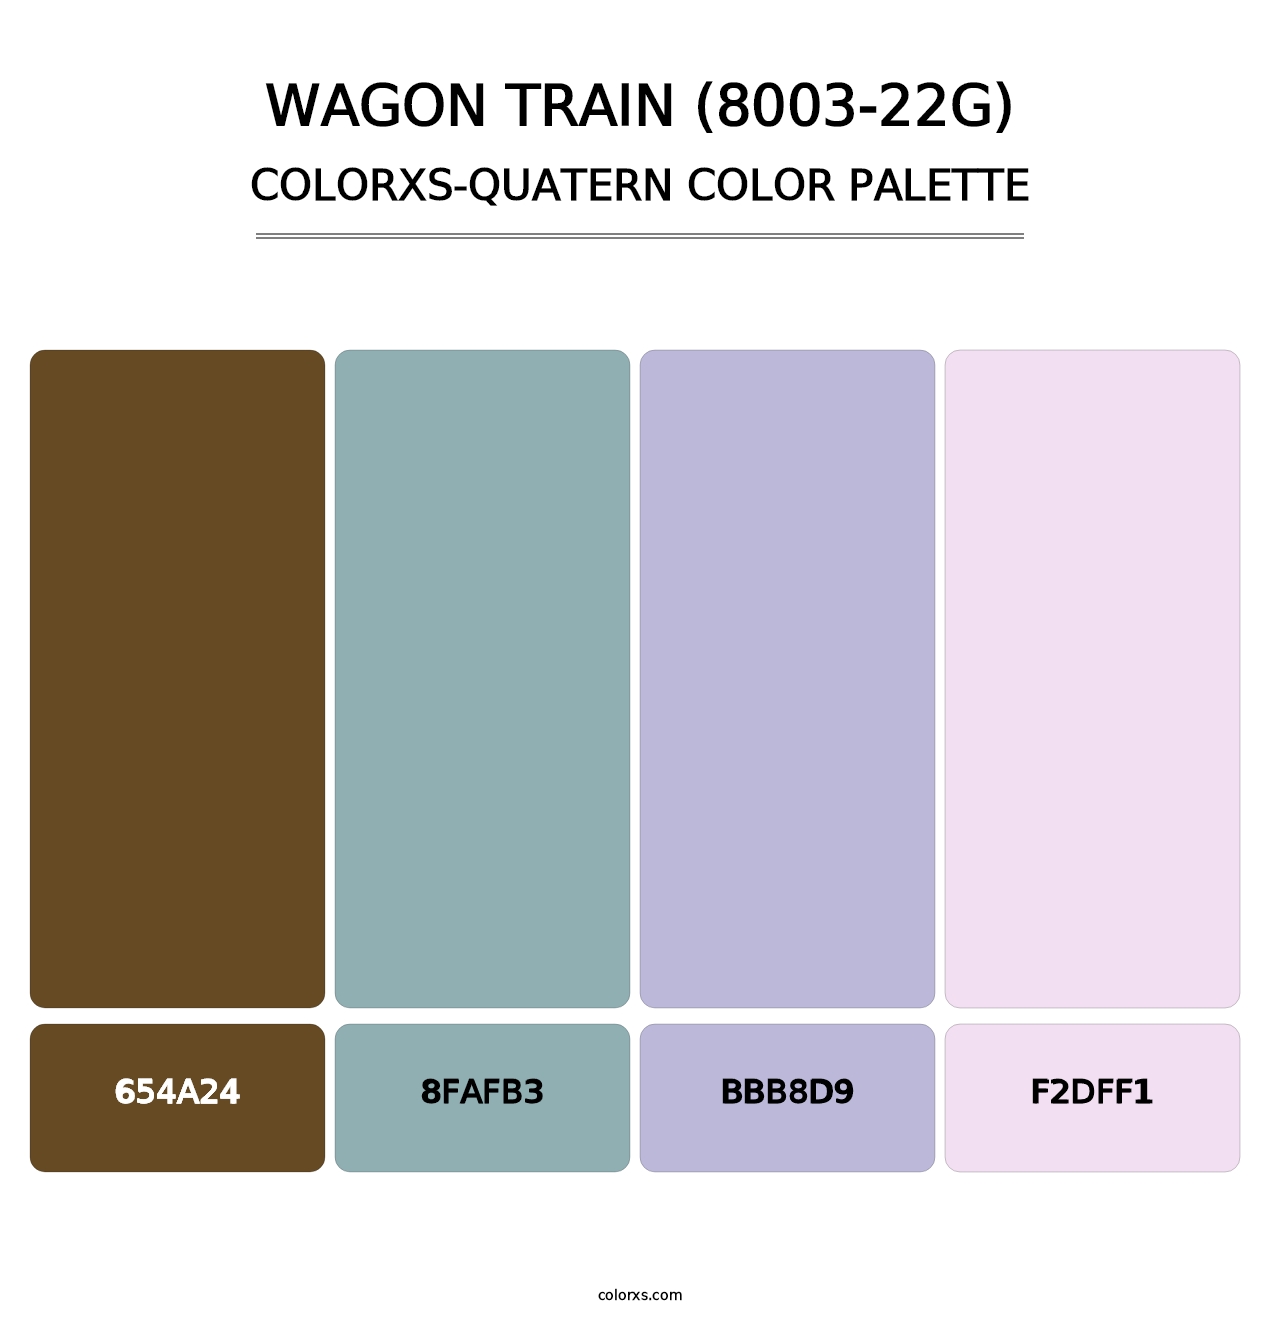 Wagon Train (8003-22G) - Colorxs Quatern Palette